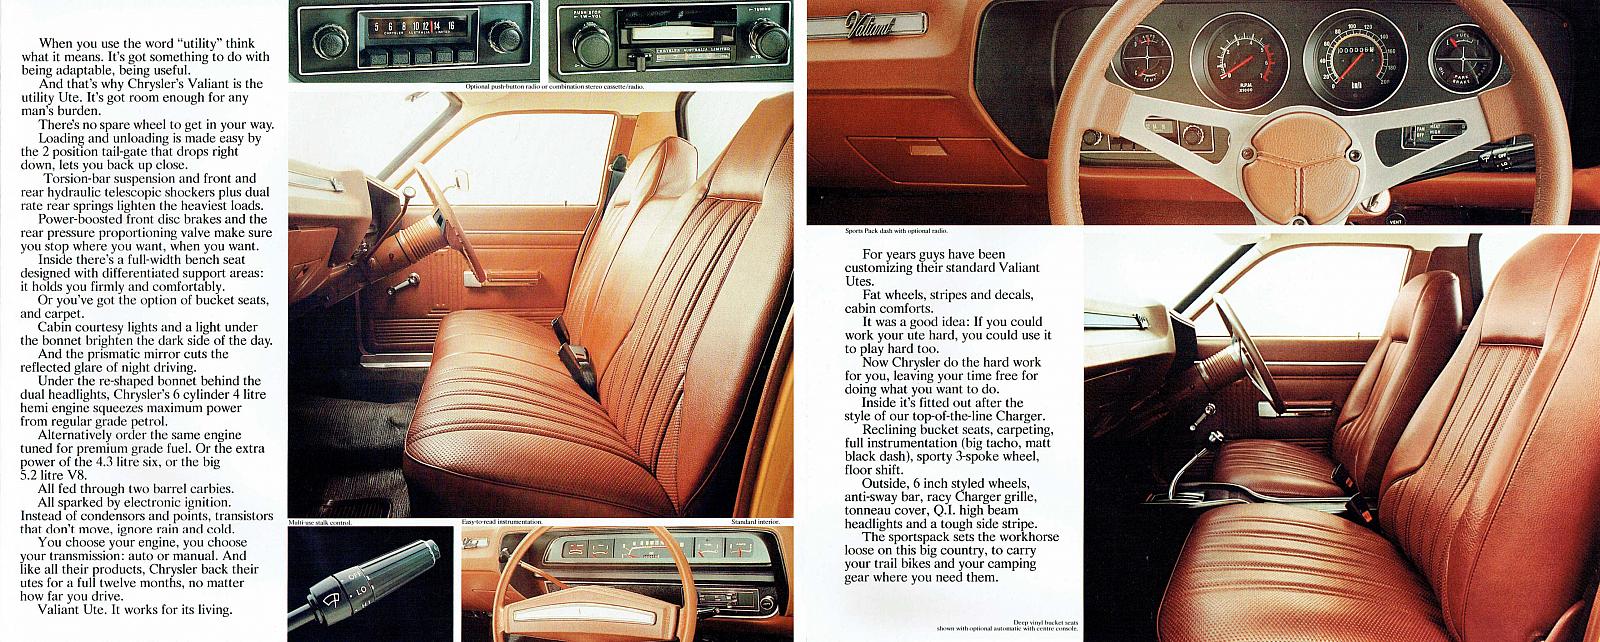 1976 Chrysler CL Valiant Utility Brochure Page 4